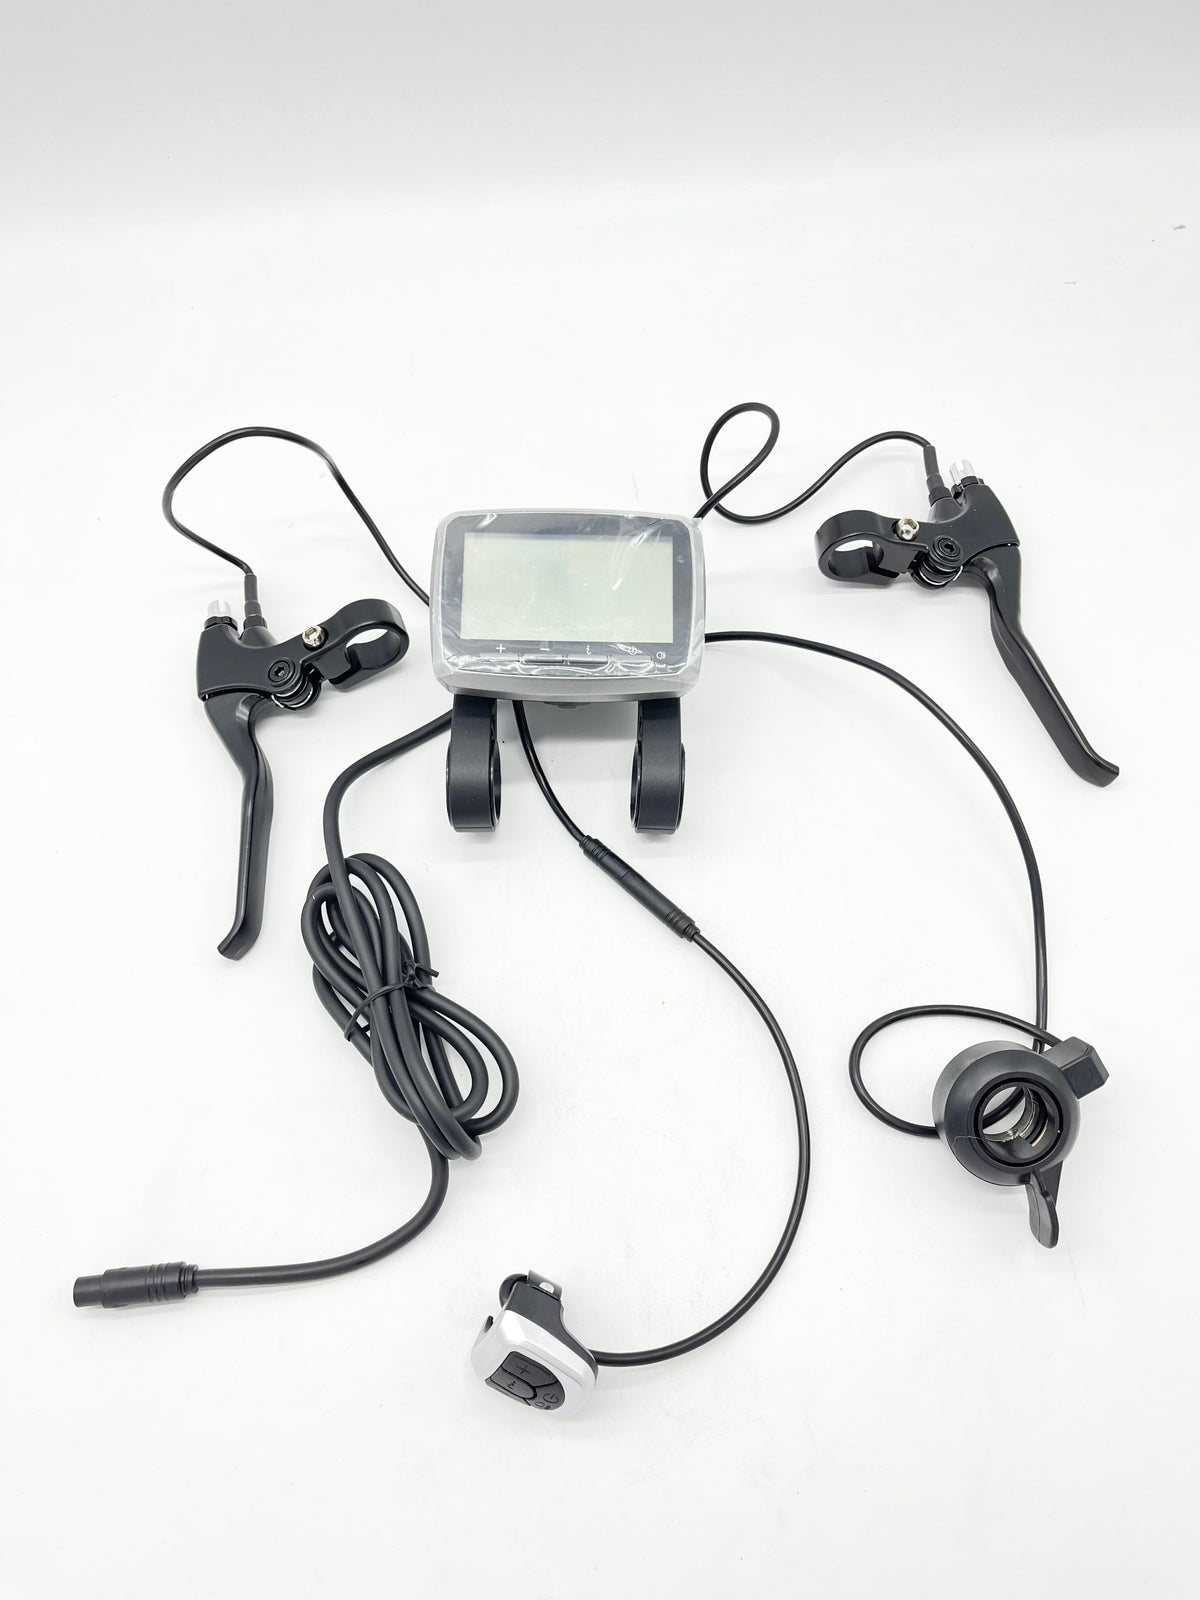 VLCD-5 Display ( 8 pin ), Throttle, and E-Brakes Bundle for TSDZ2